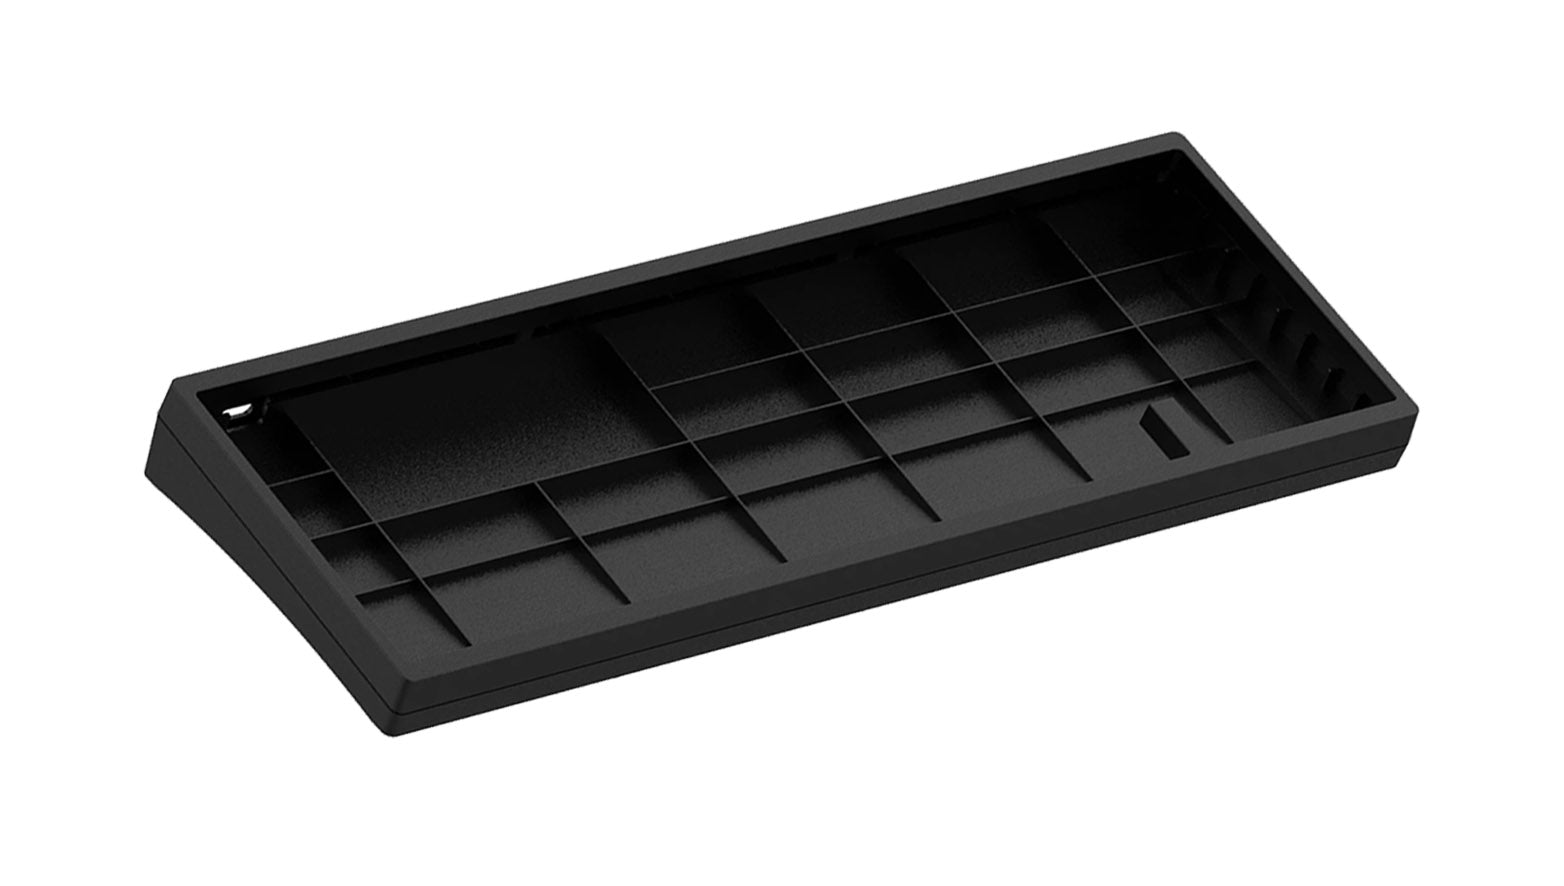 KBDFans KBD67 Lite ABS Plastic Case Black MK4JNHQCPL |0|